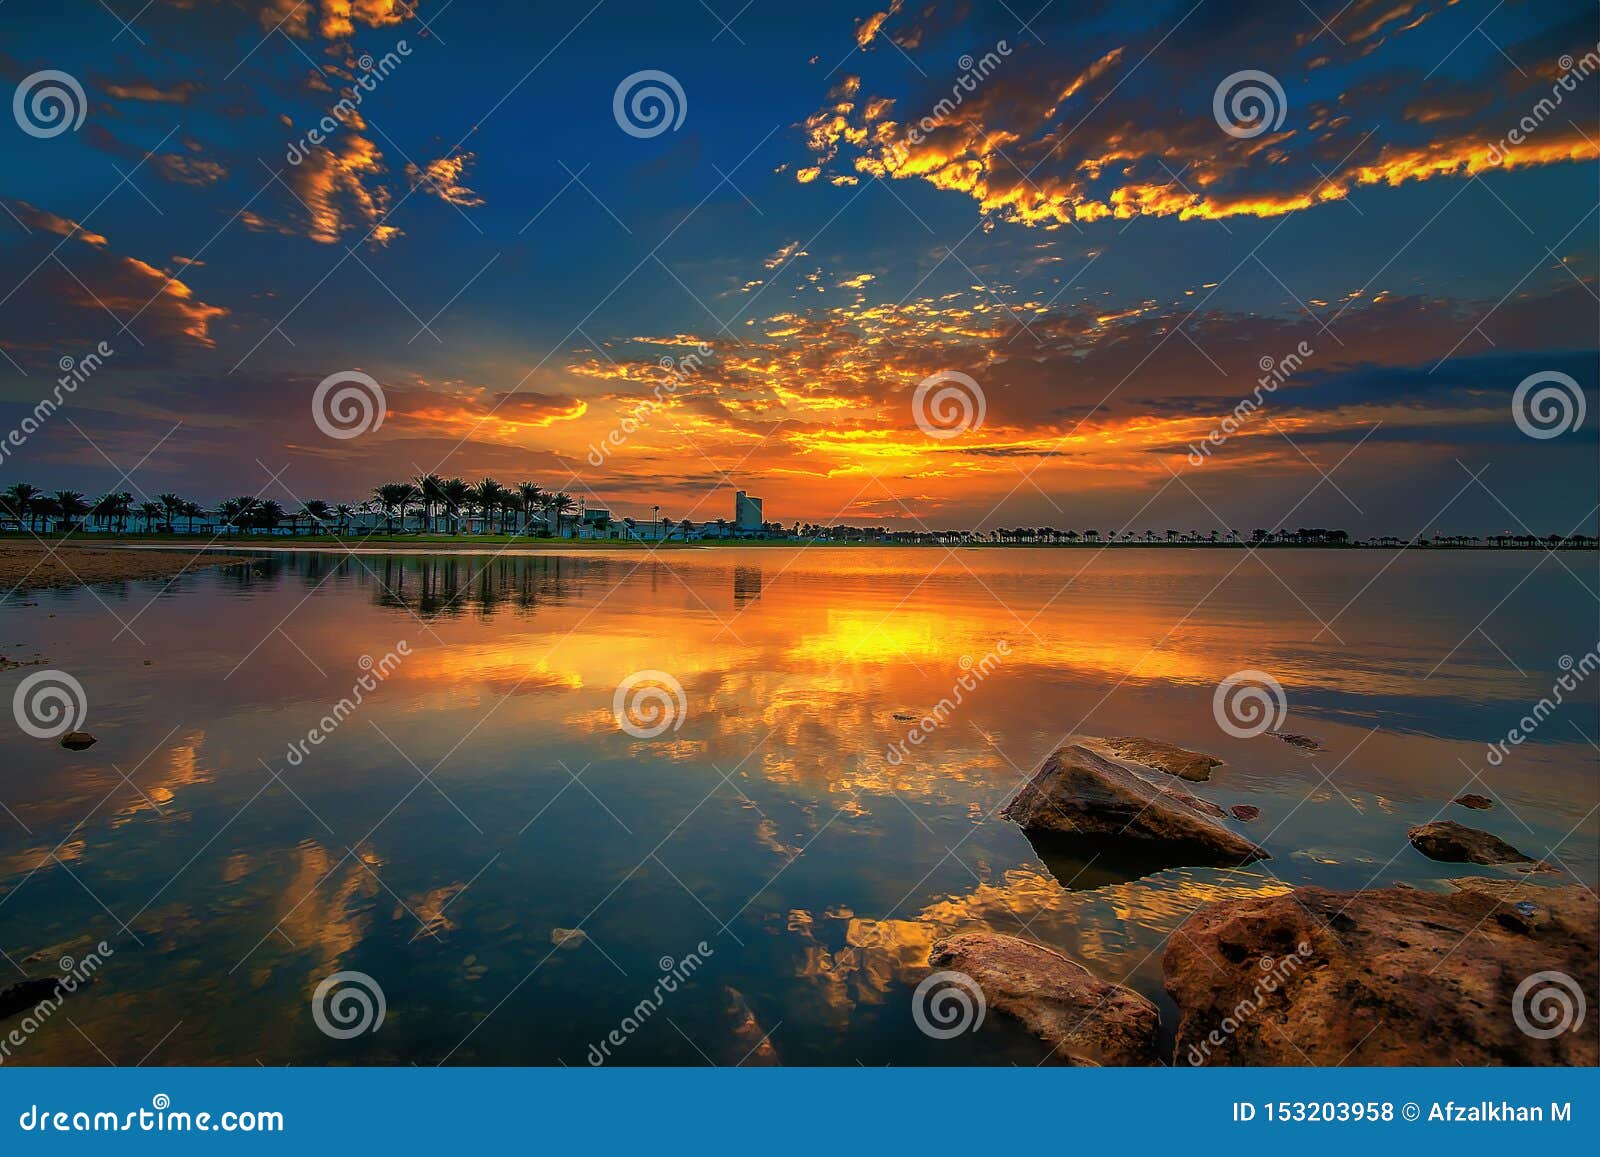 morning drama sunrise view in modon lake dammam saudi arabia